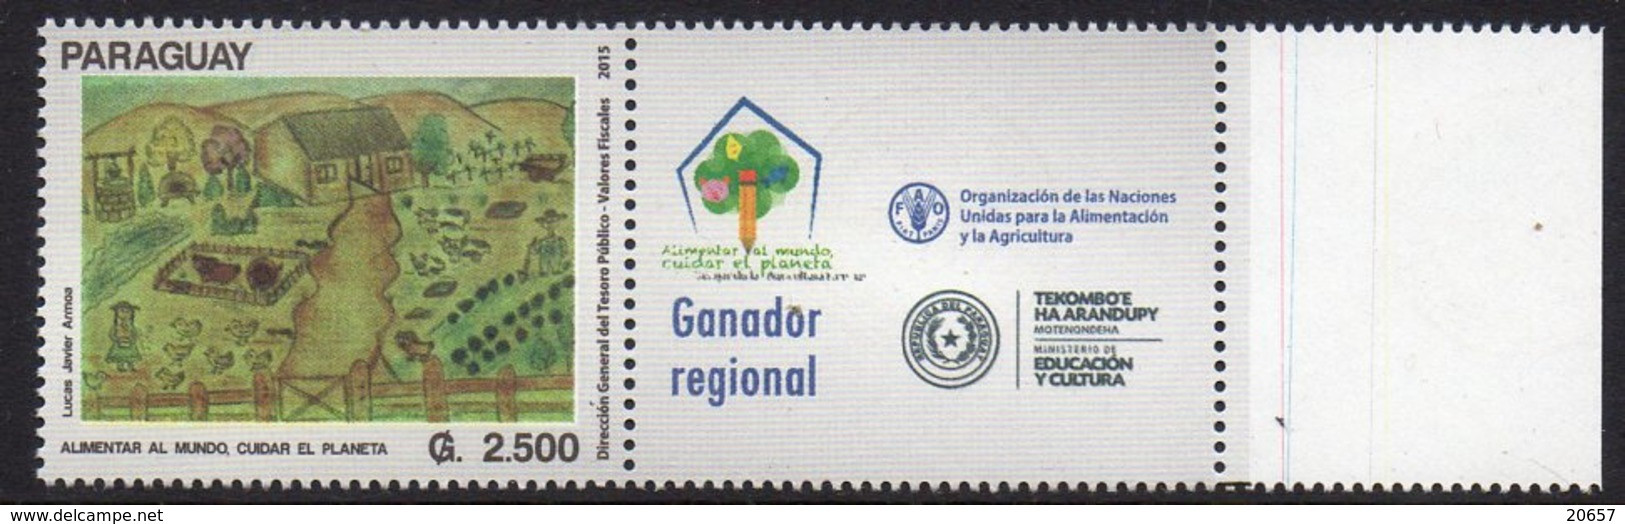 Paraguay 3203 FAO ONU Alimentation - Contre La Faim